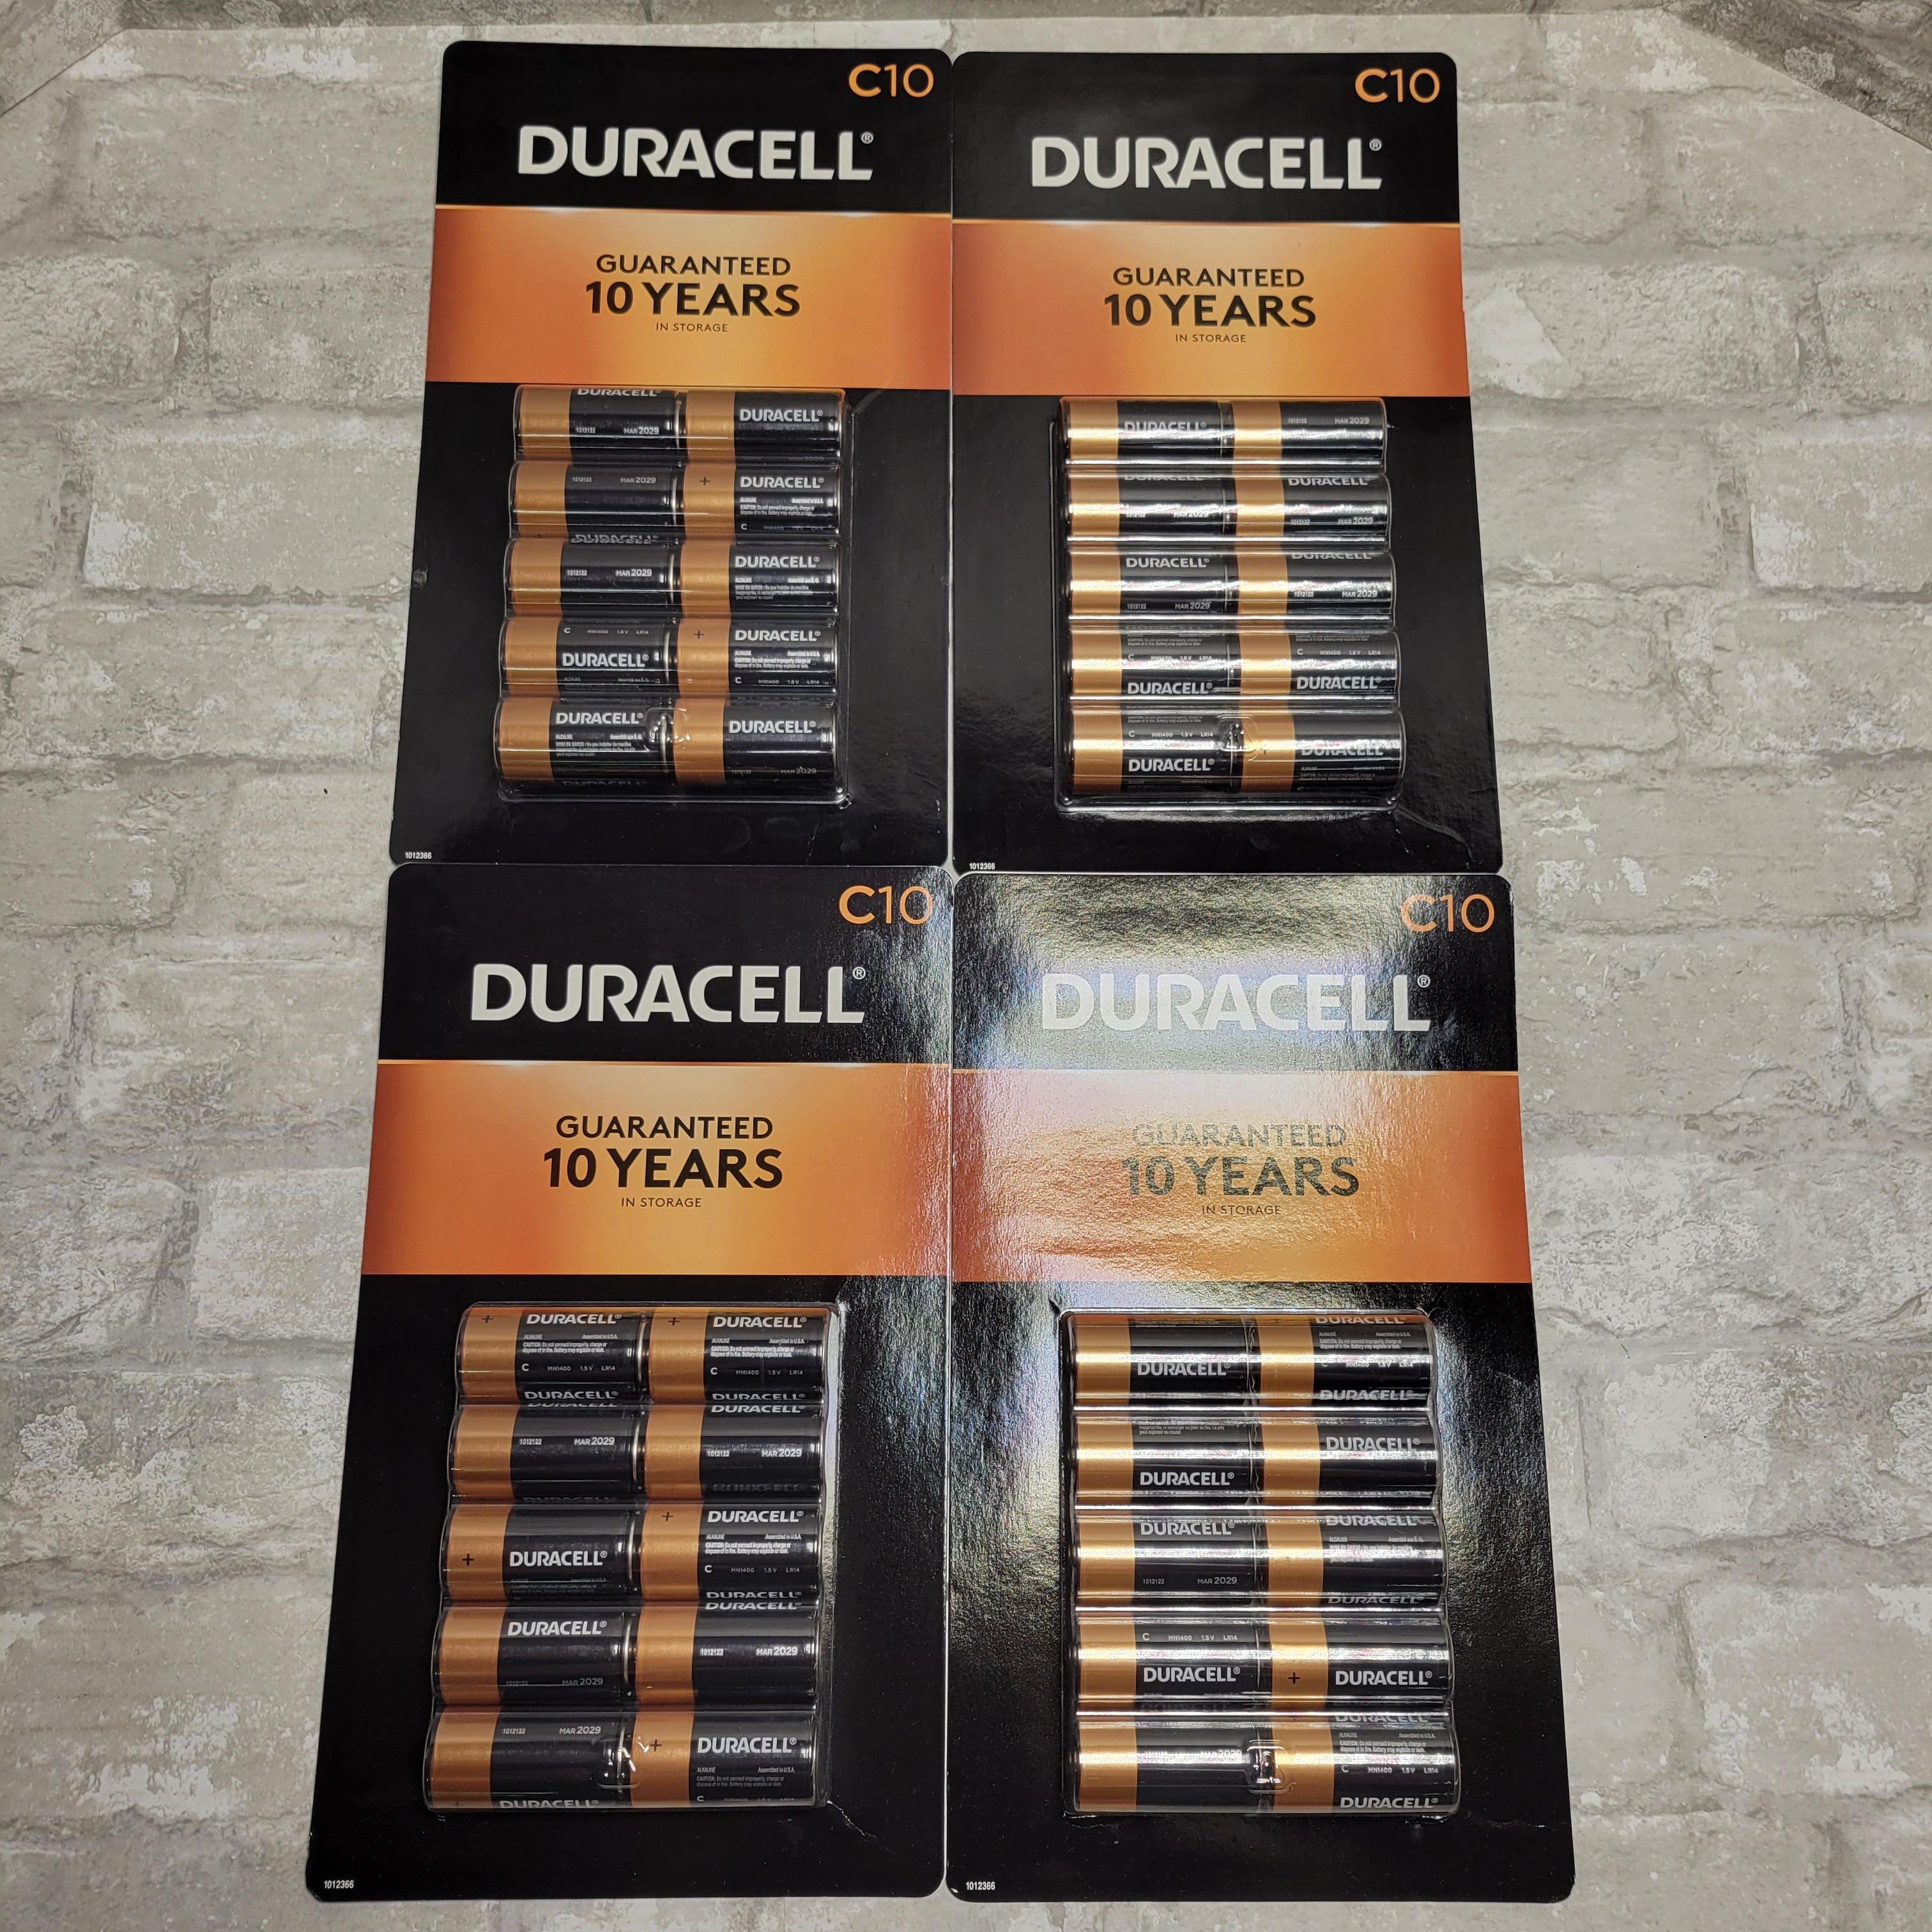 DURACELL 80240709 Coppertop Alkaline Batteries C - 10 pk, Lot of 4 (8133094572270)